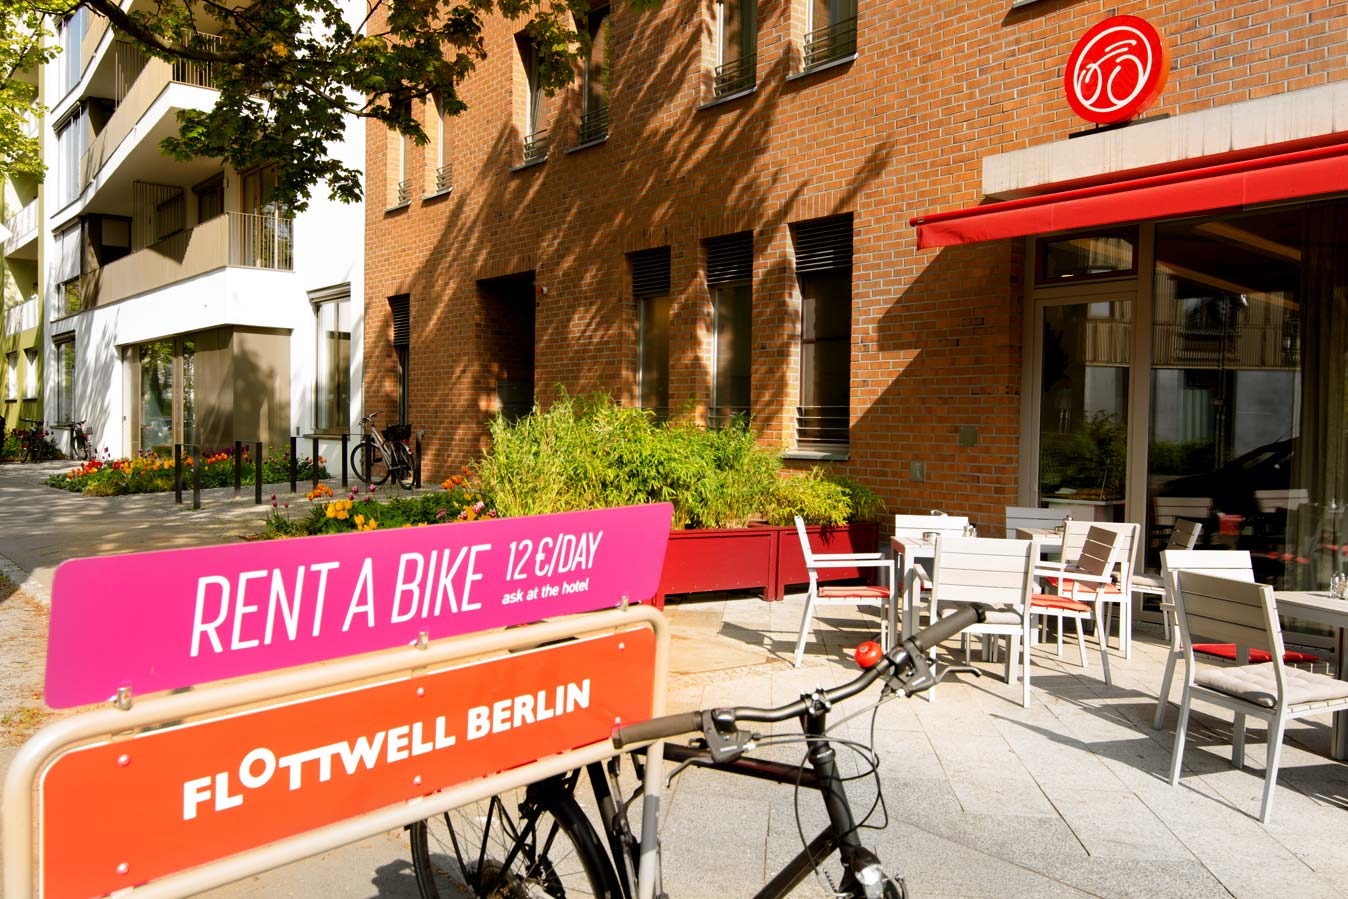 FLOTTWELL BERLIN Hotel - Lobby - Rent a Bike